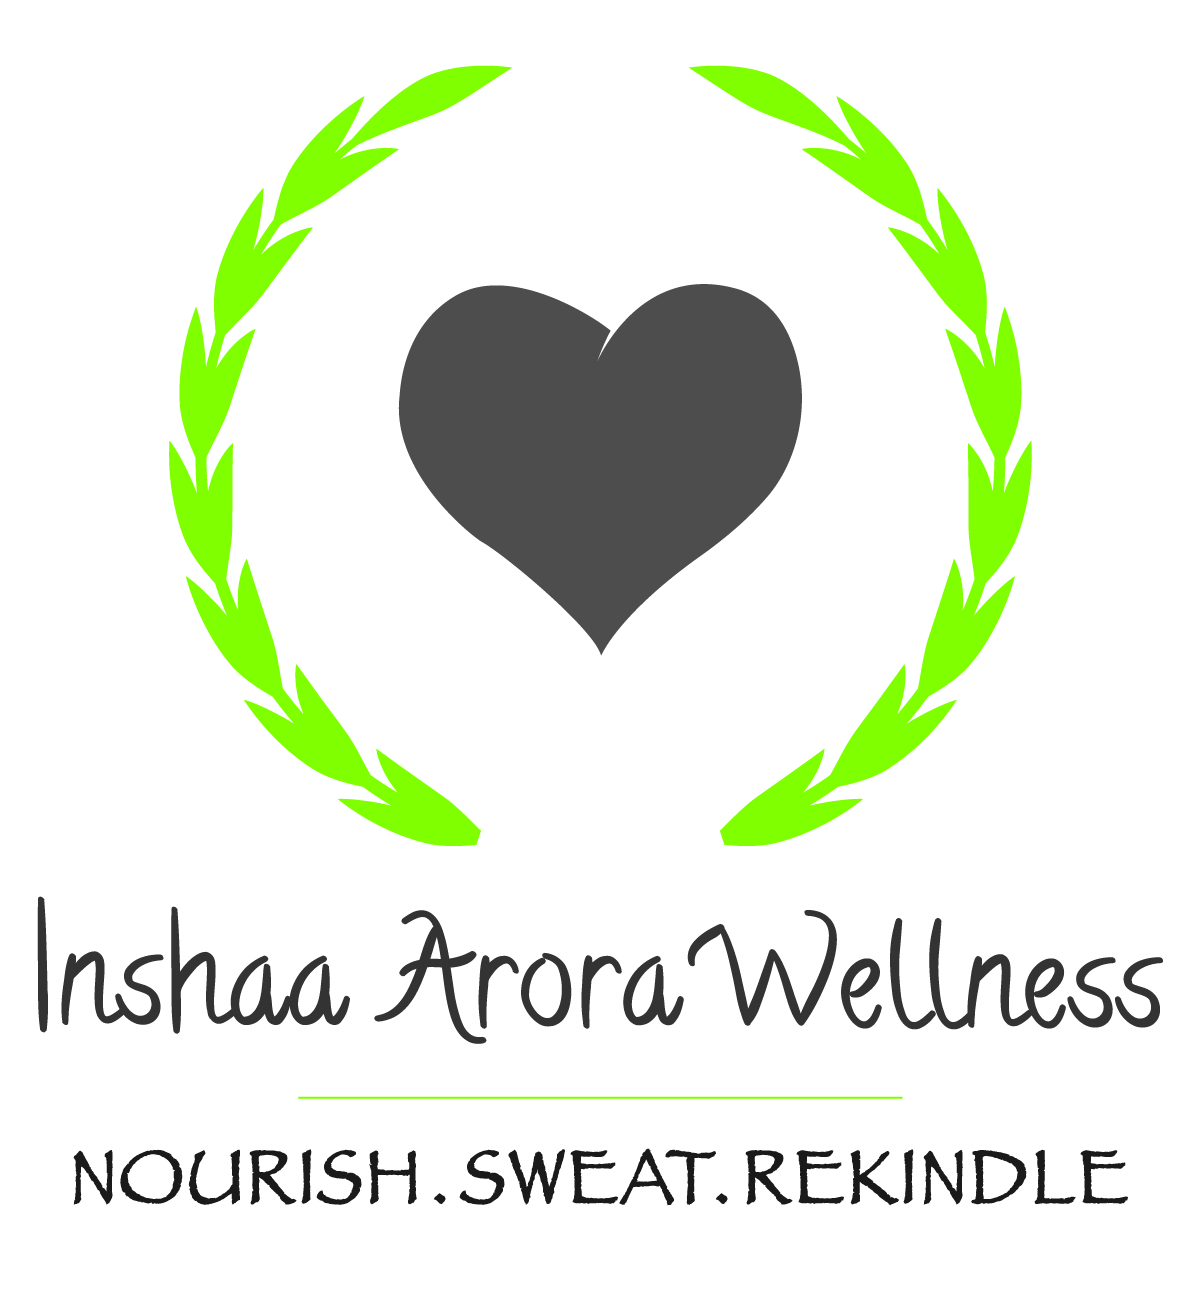 Inshaa Arora Wellness